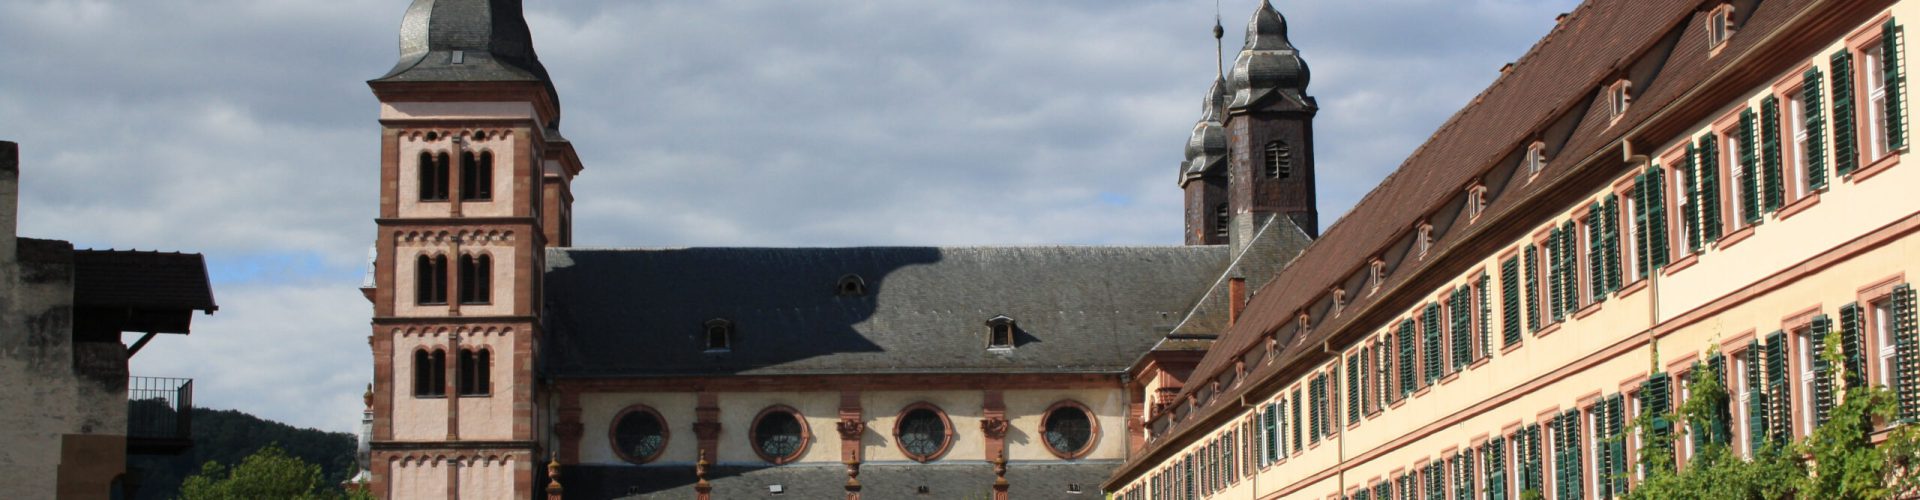 Amorbach-abteikirche